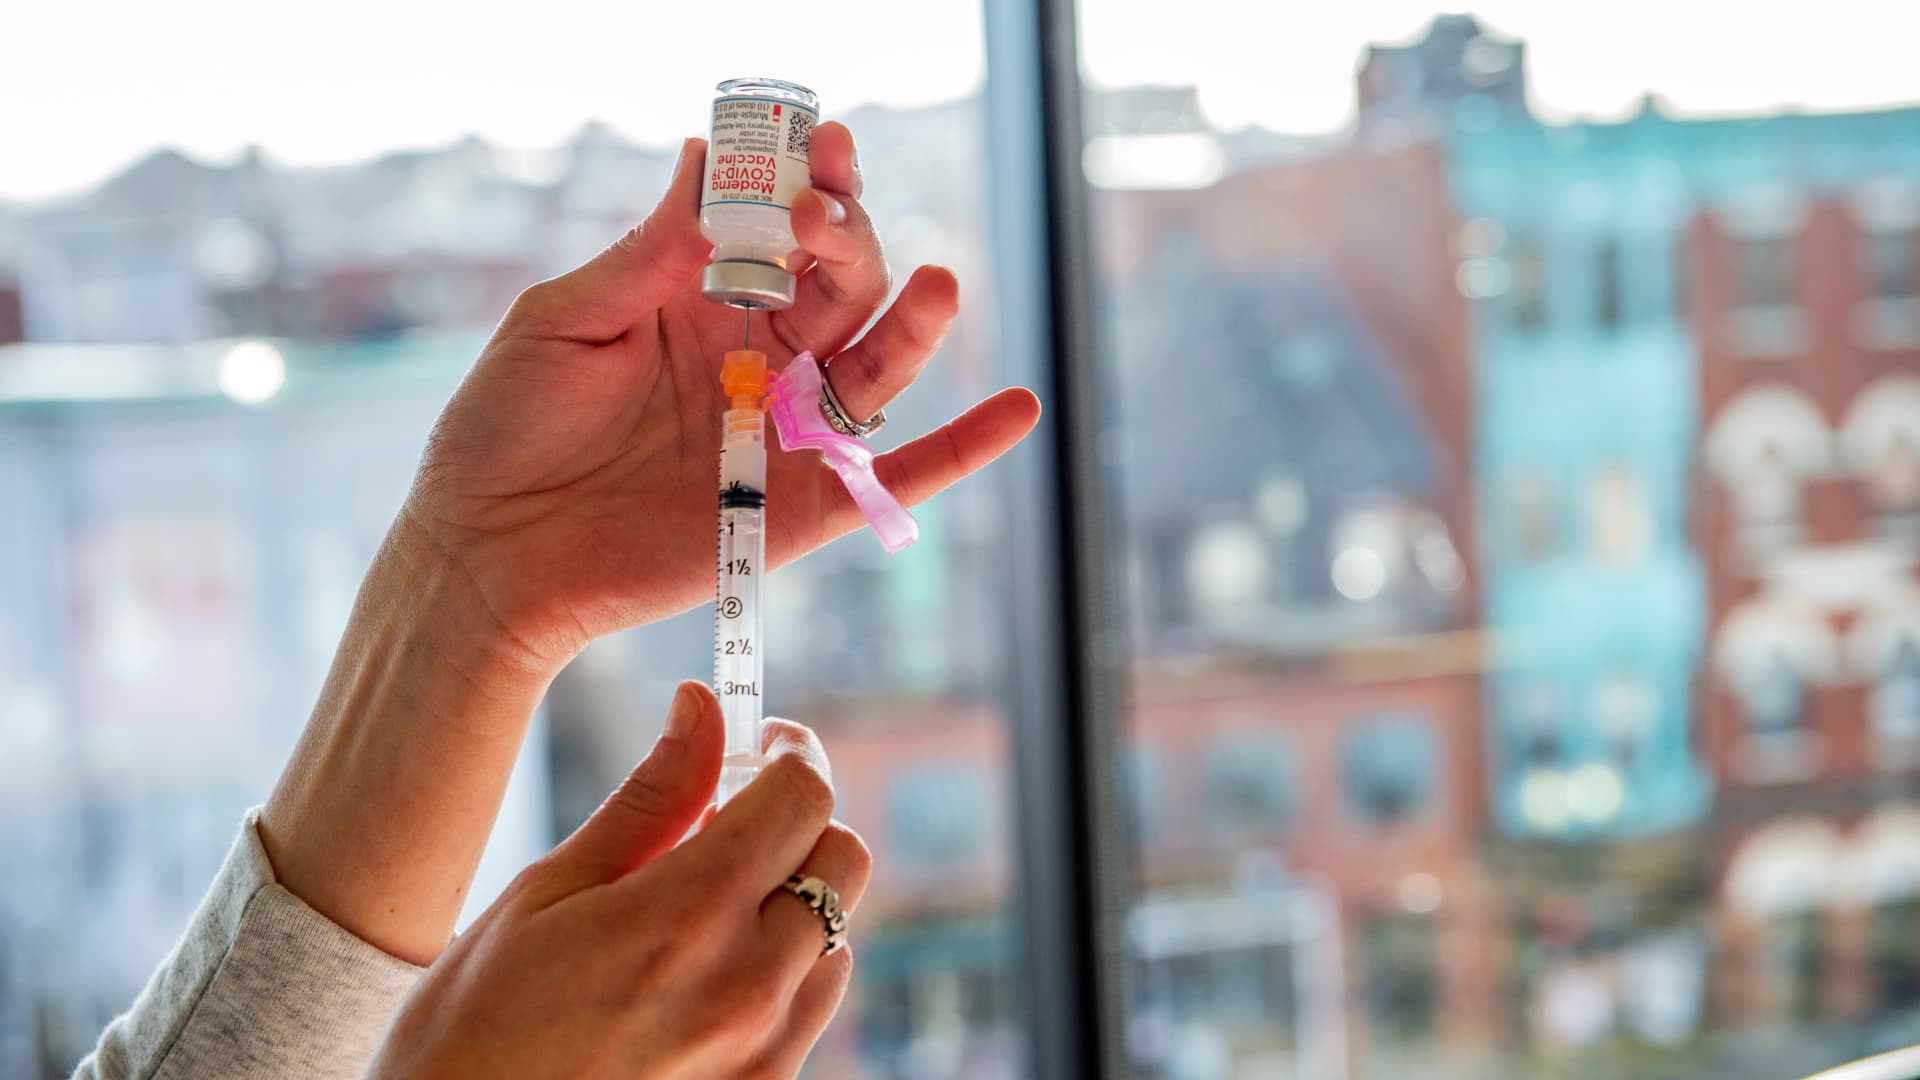 A nurse prepares a syringe with the Moderna vaccine at the East Boston Neighborhood Health Center (EBNHC) in Boston, Massachusetts on December 24, 2020.